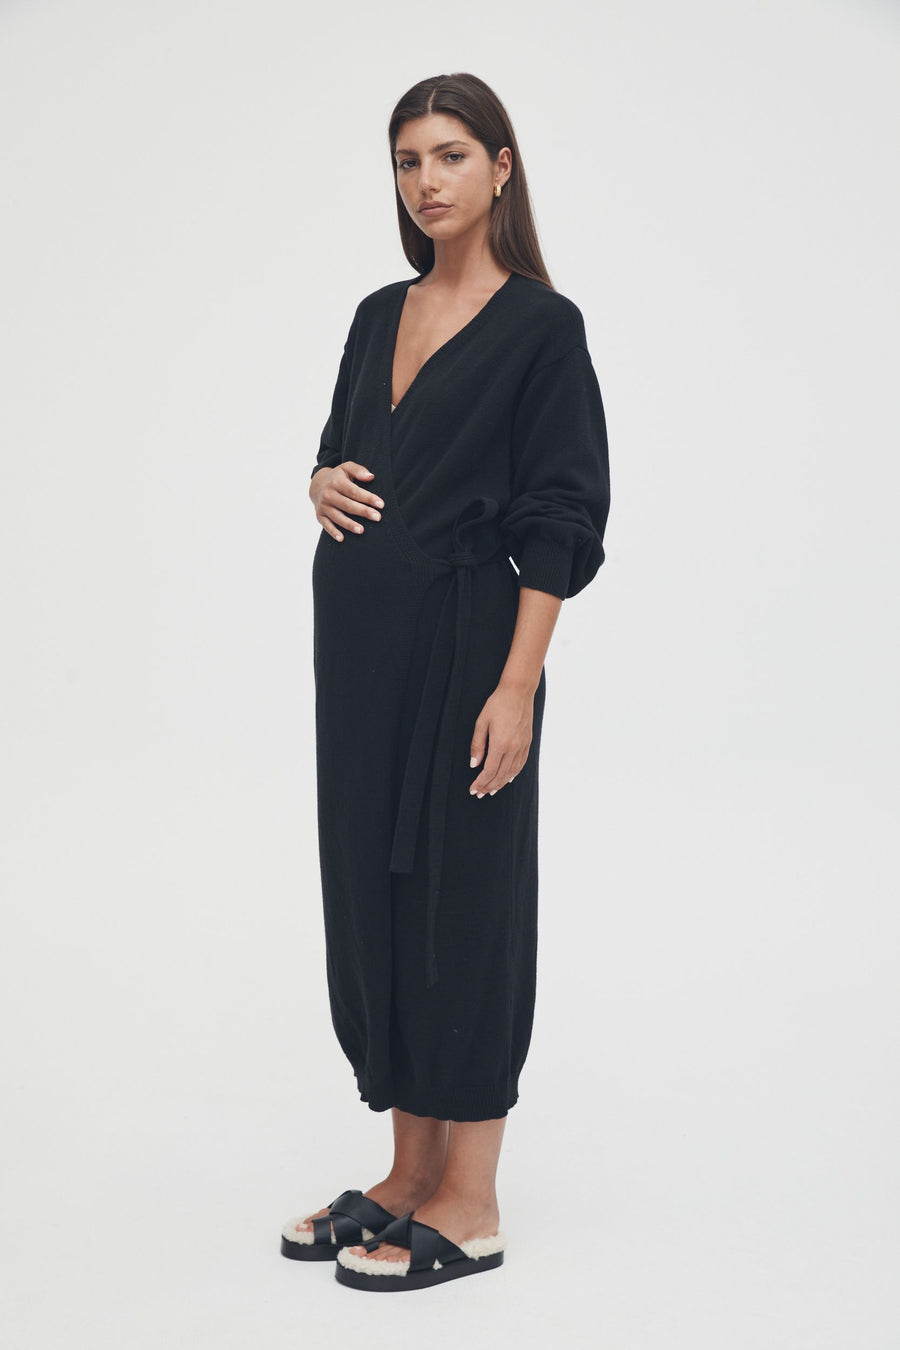 Black Maternity Wrap Dress 3